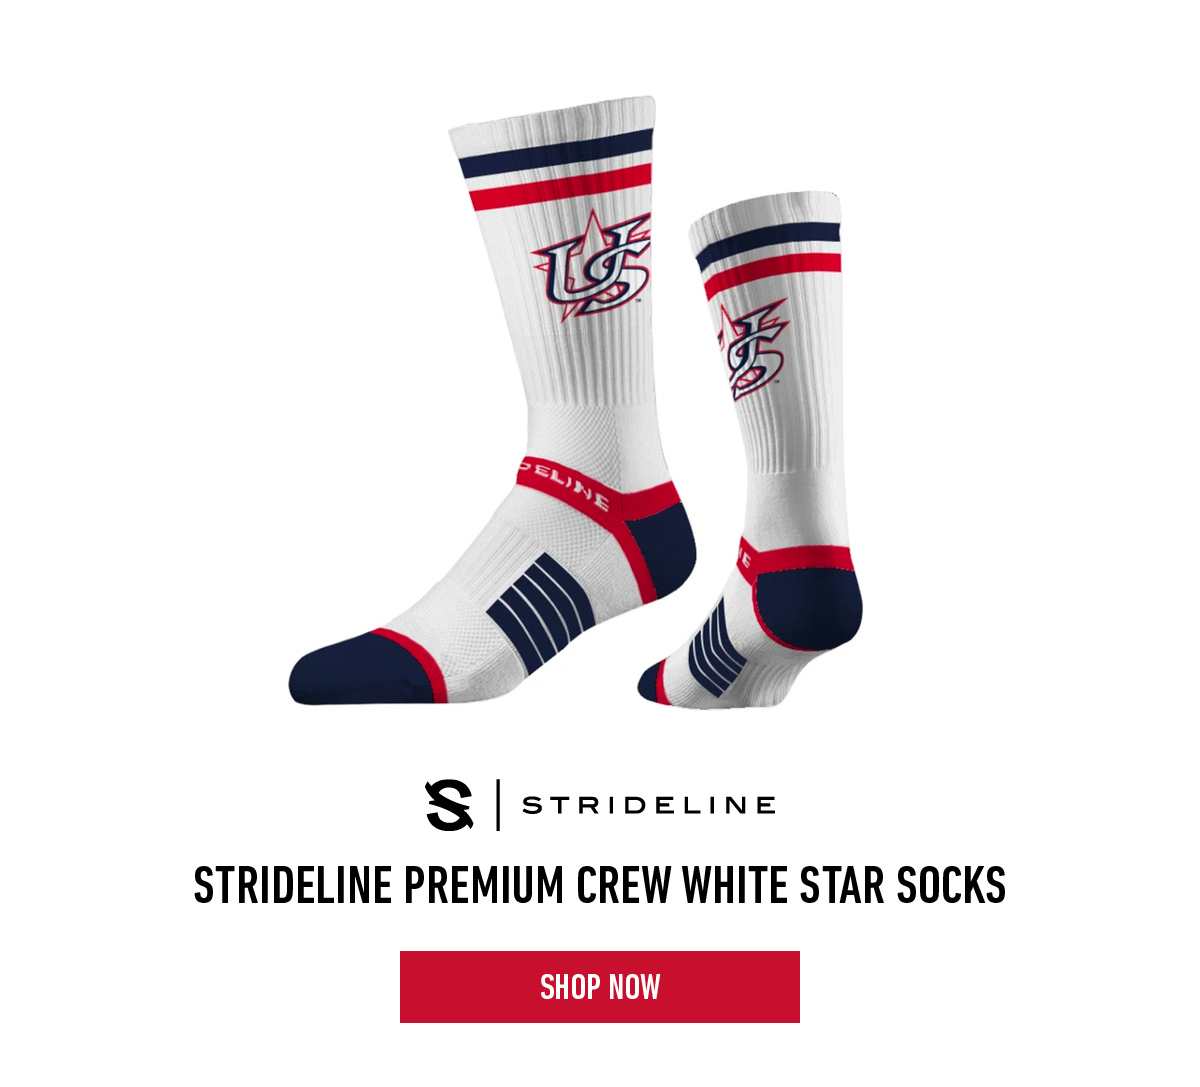 Strideline Premium Crew White Star Socks